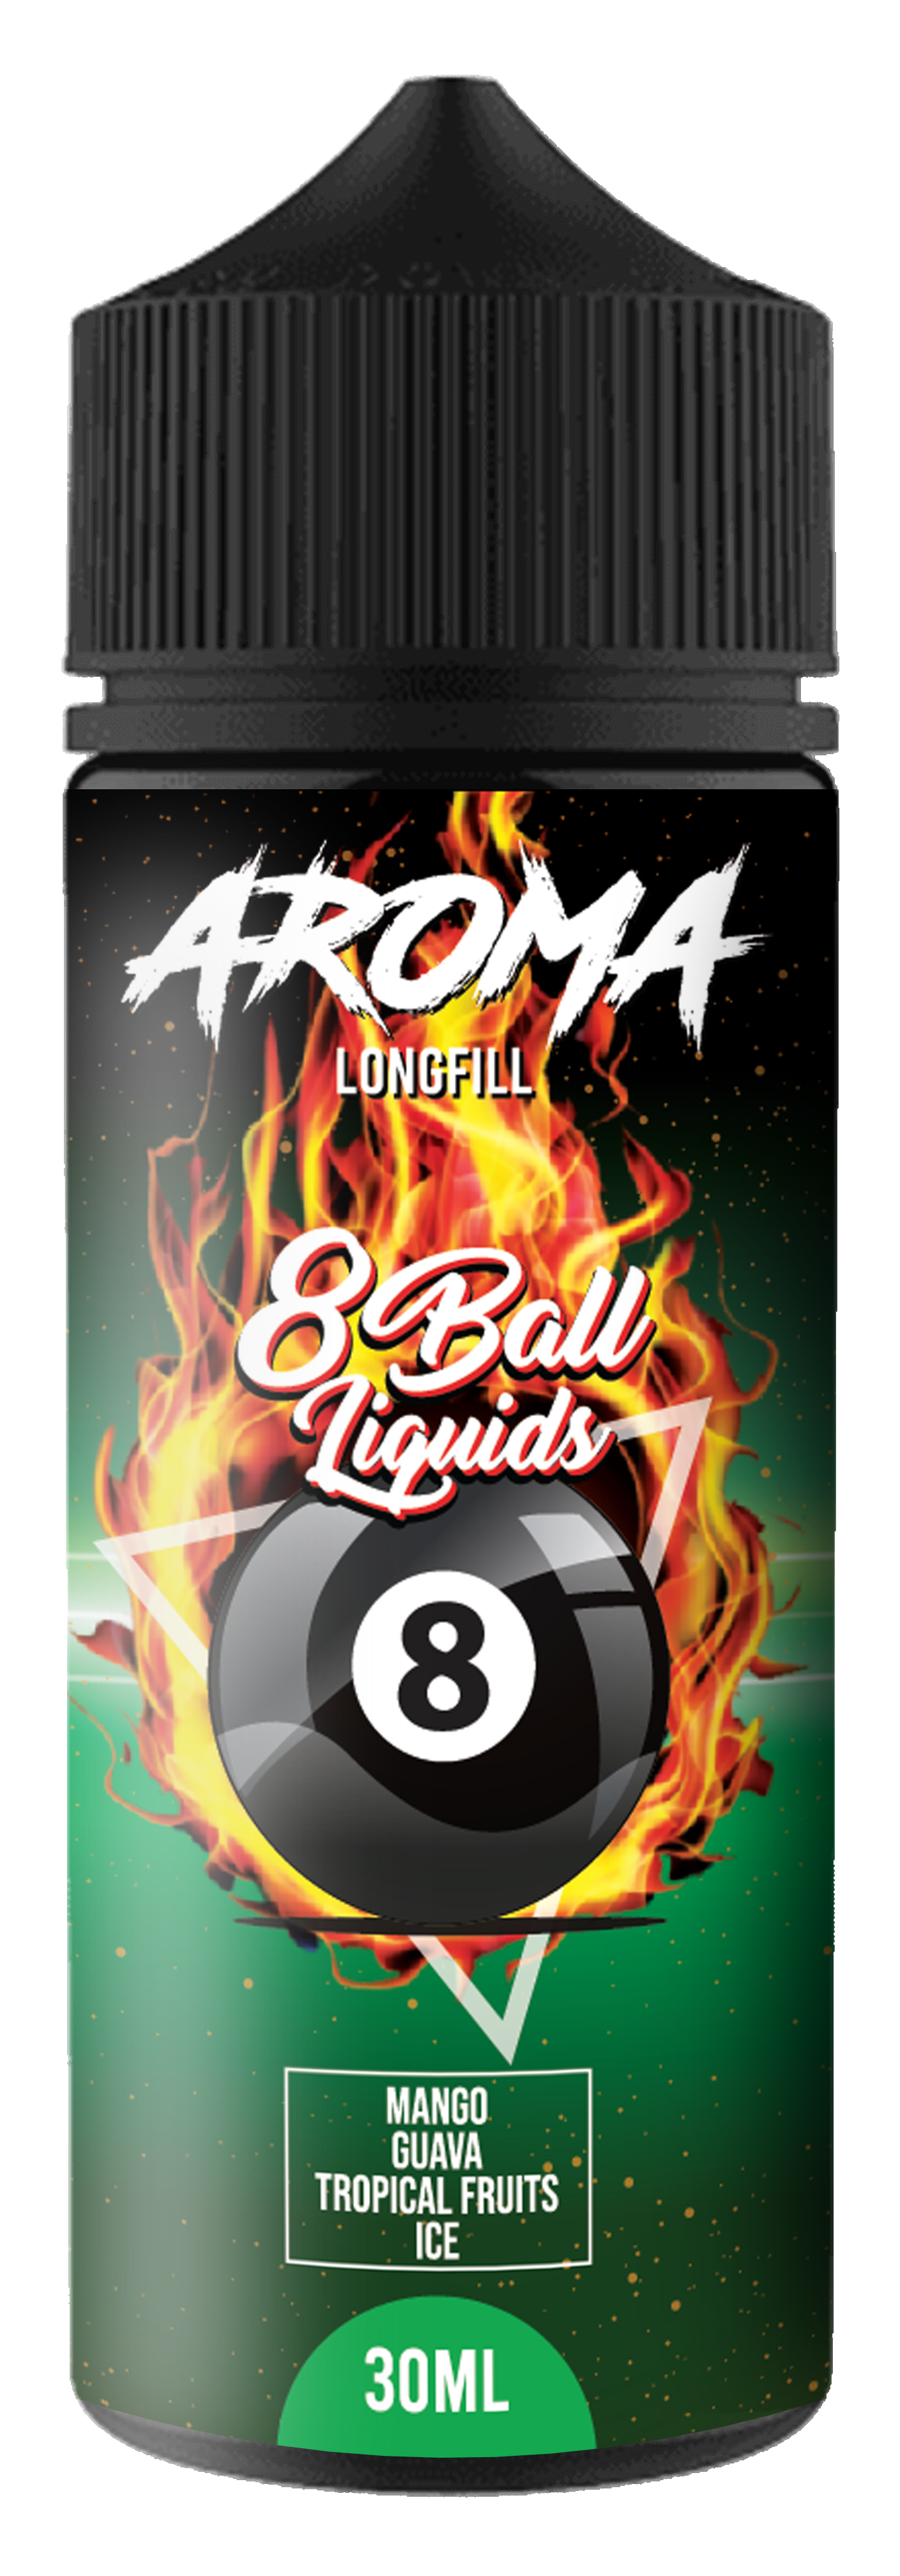 8 Ball Aroma Flavour Shot 120ml